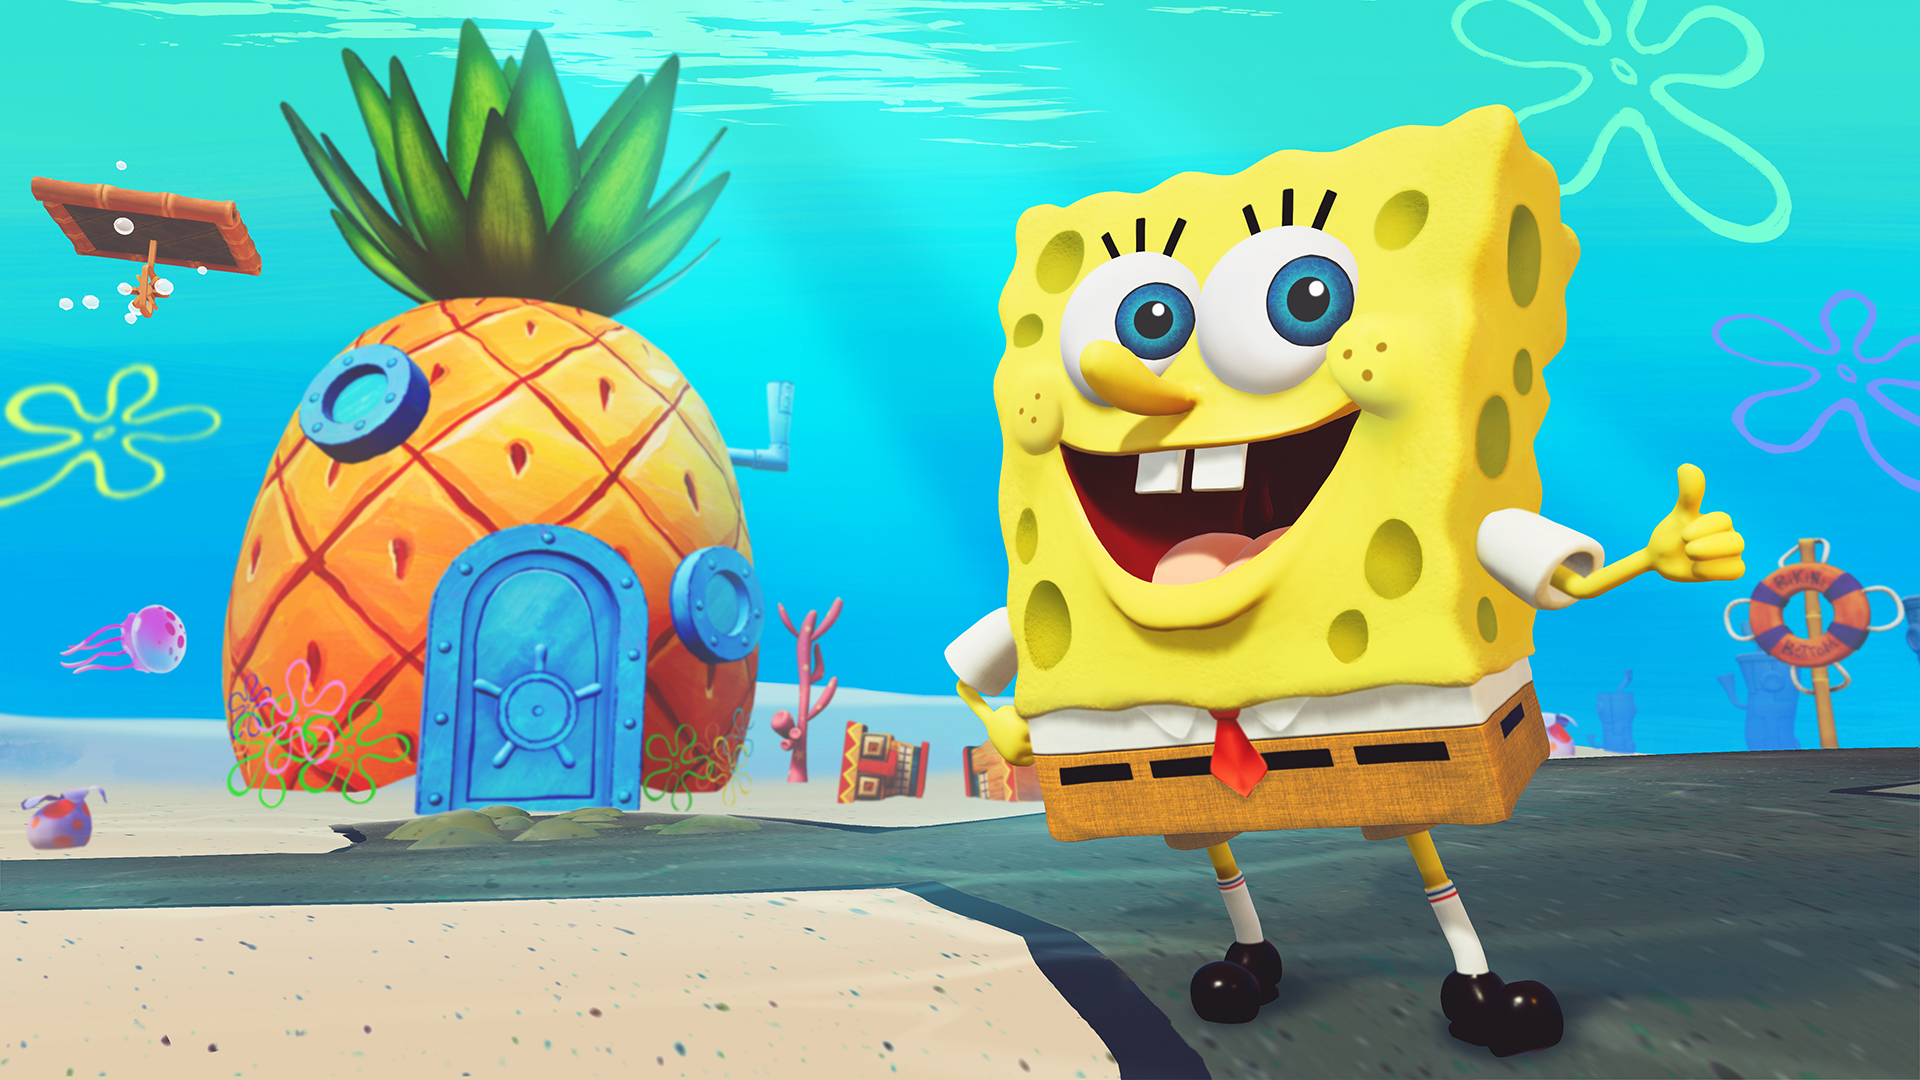 SpongeBob SquarePants: Battle for Bikini Bottom - Rehydrated on Steam